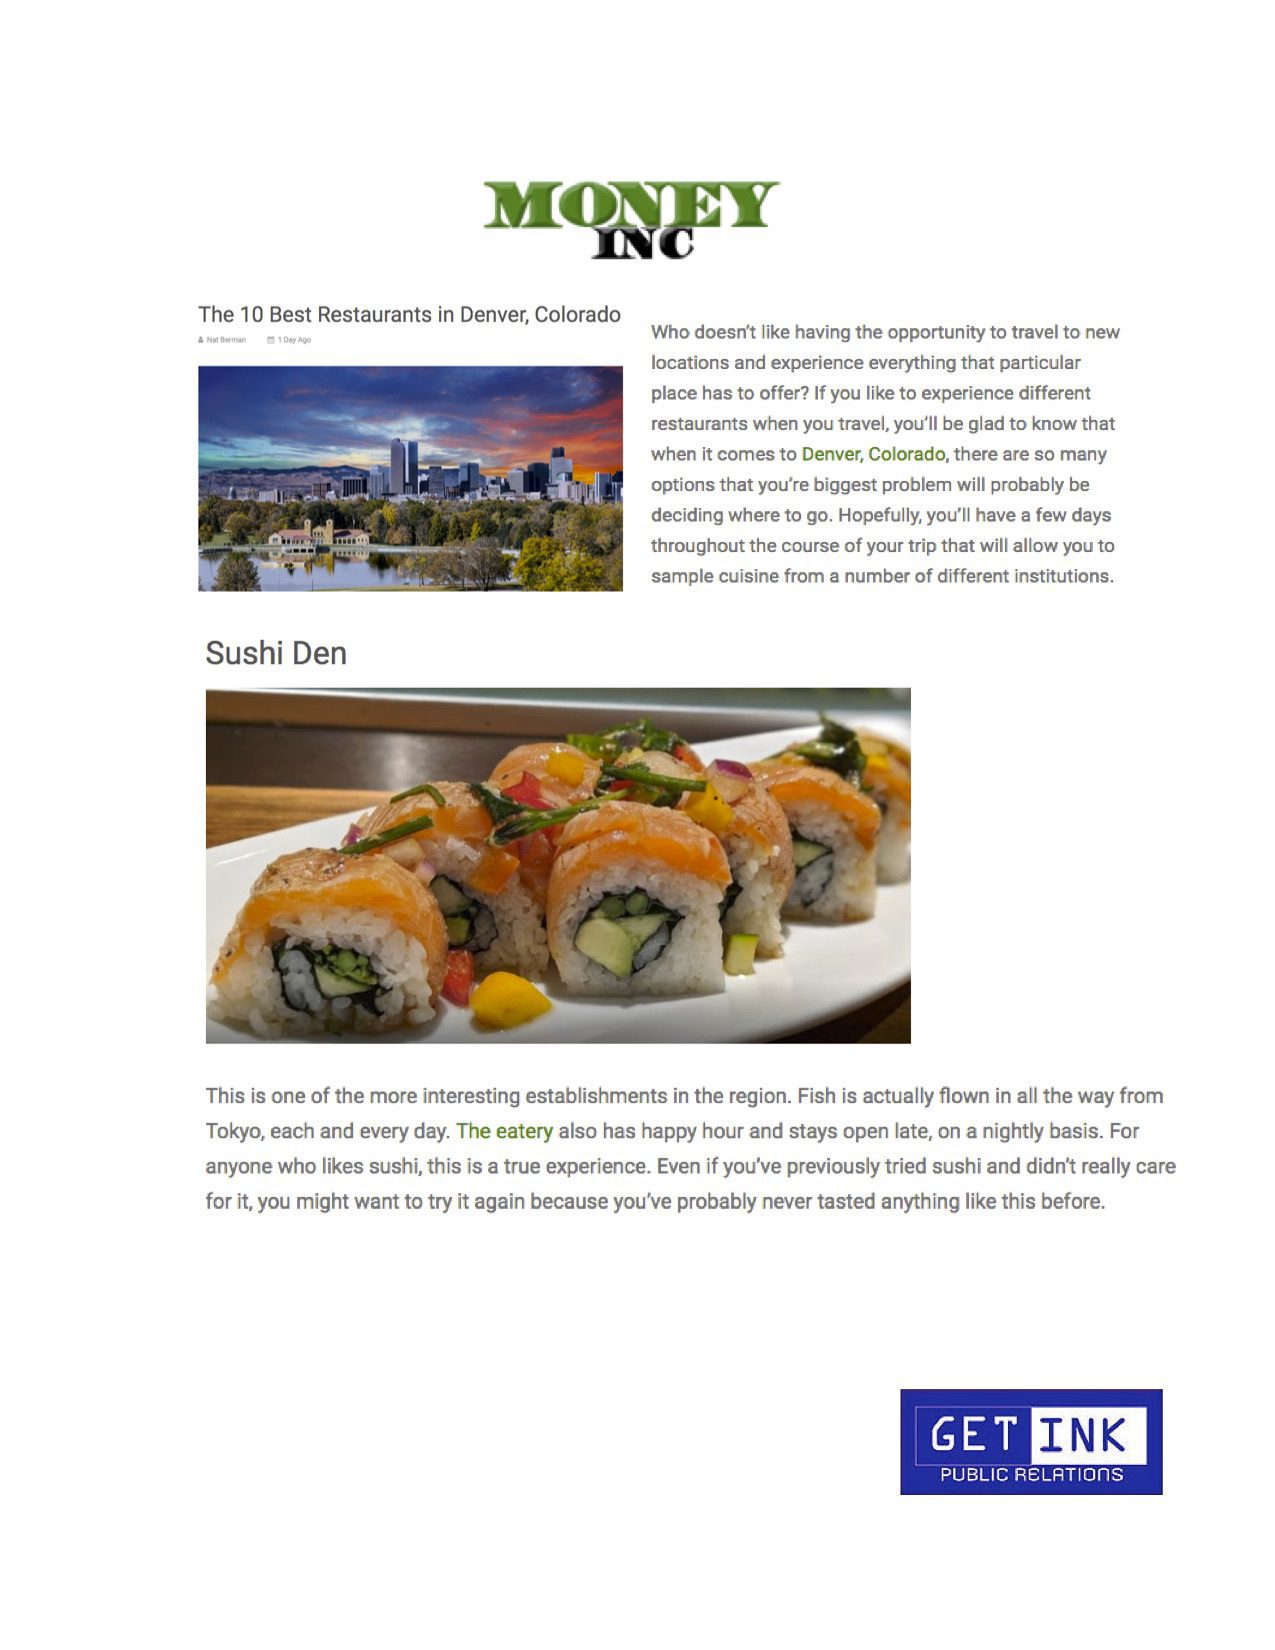 Best restaurant Denver Sushi Den in Money Inc - Get Ink Pr clients